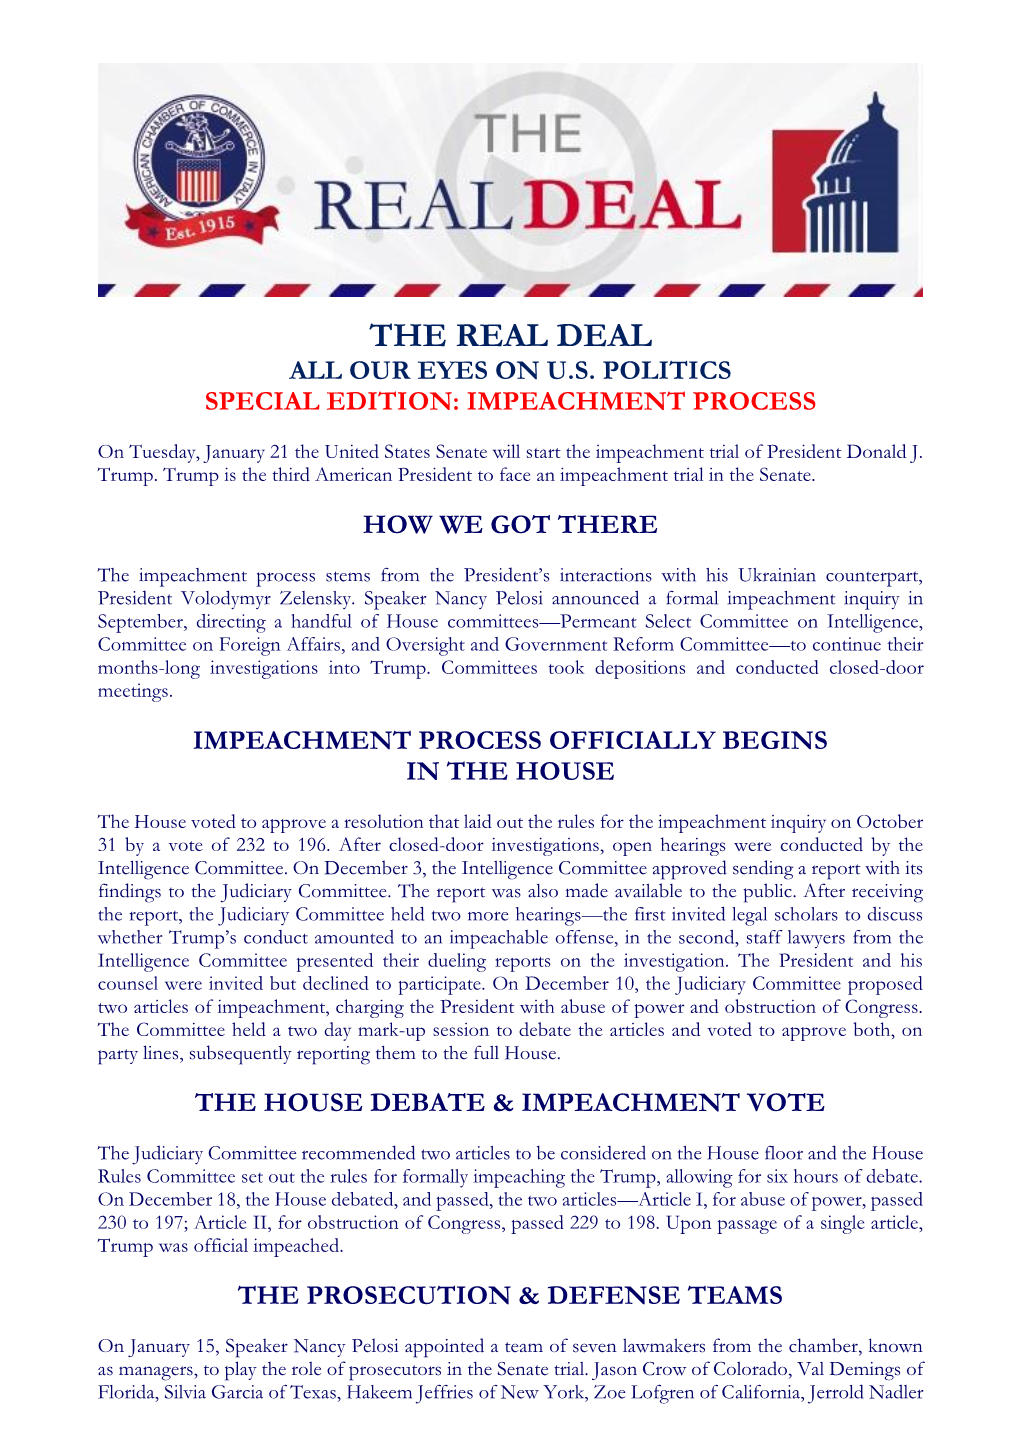 Impeachment Process